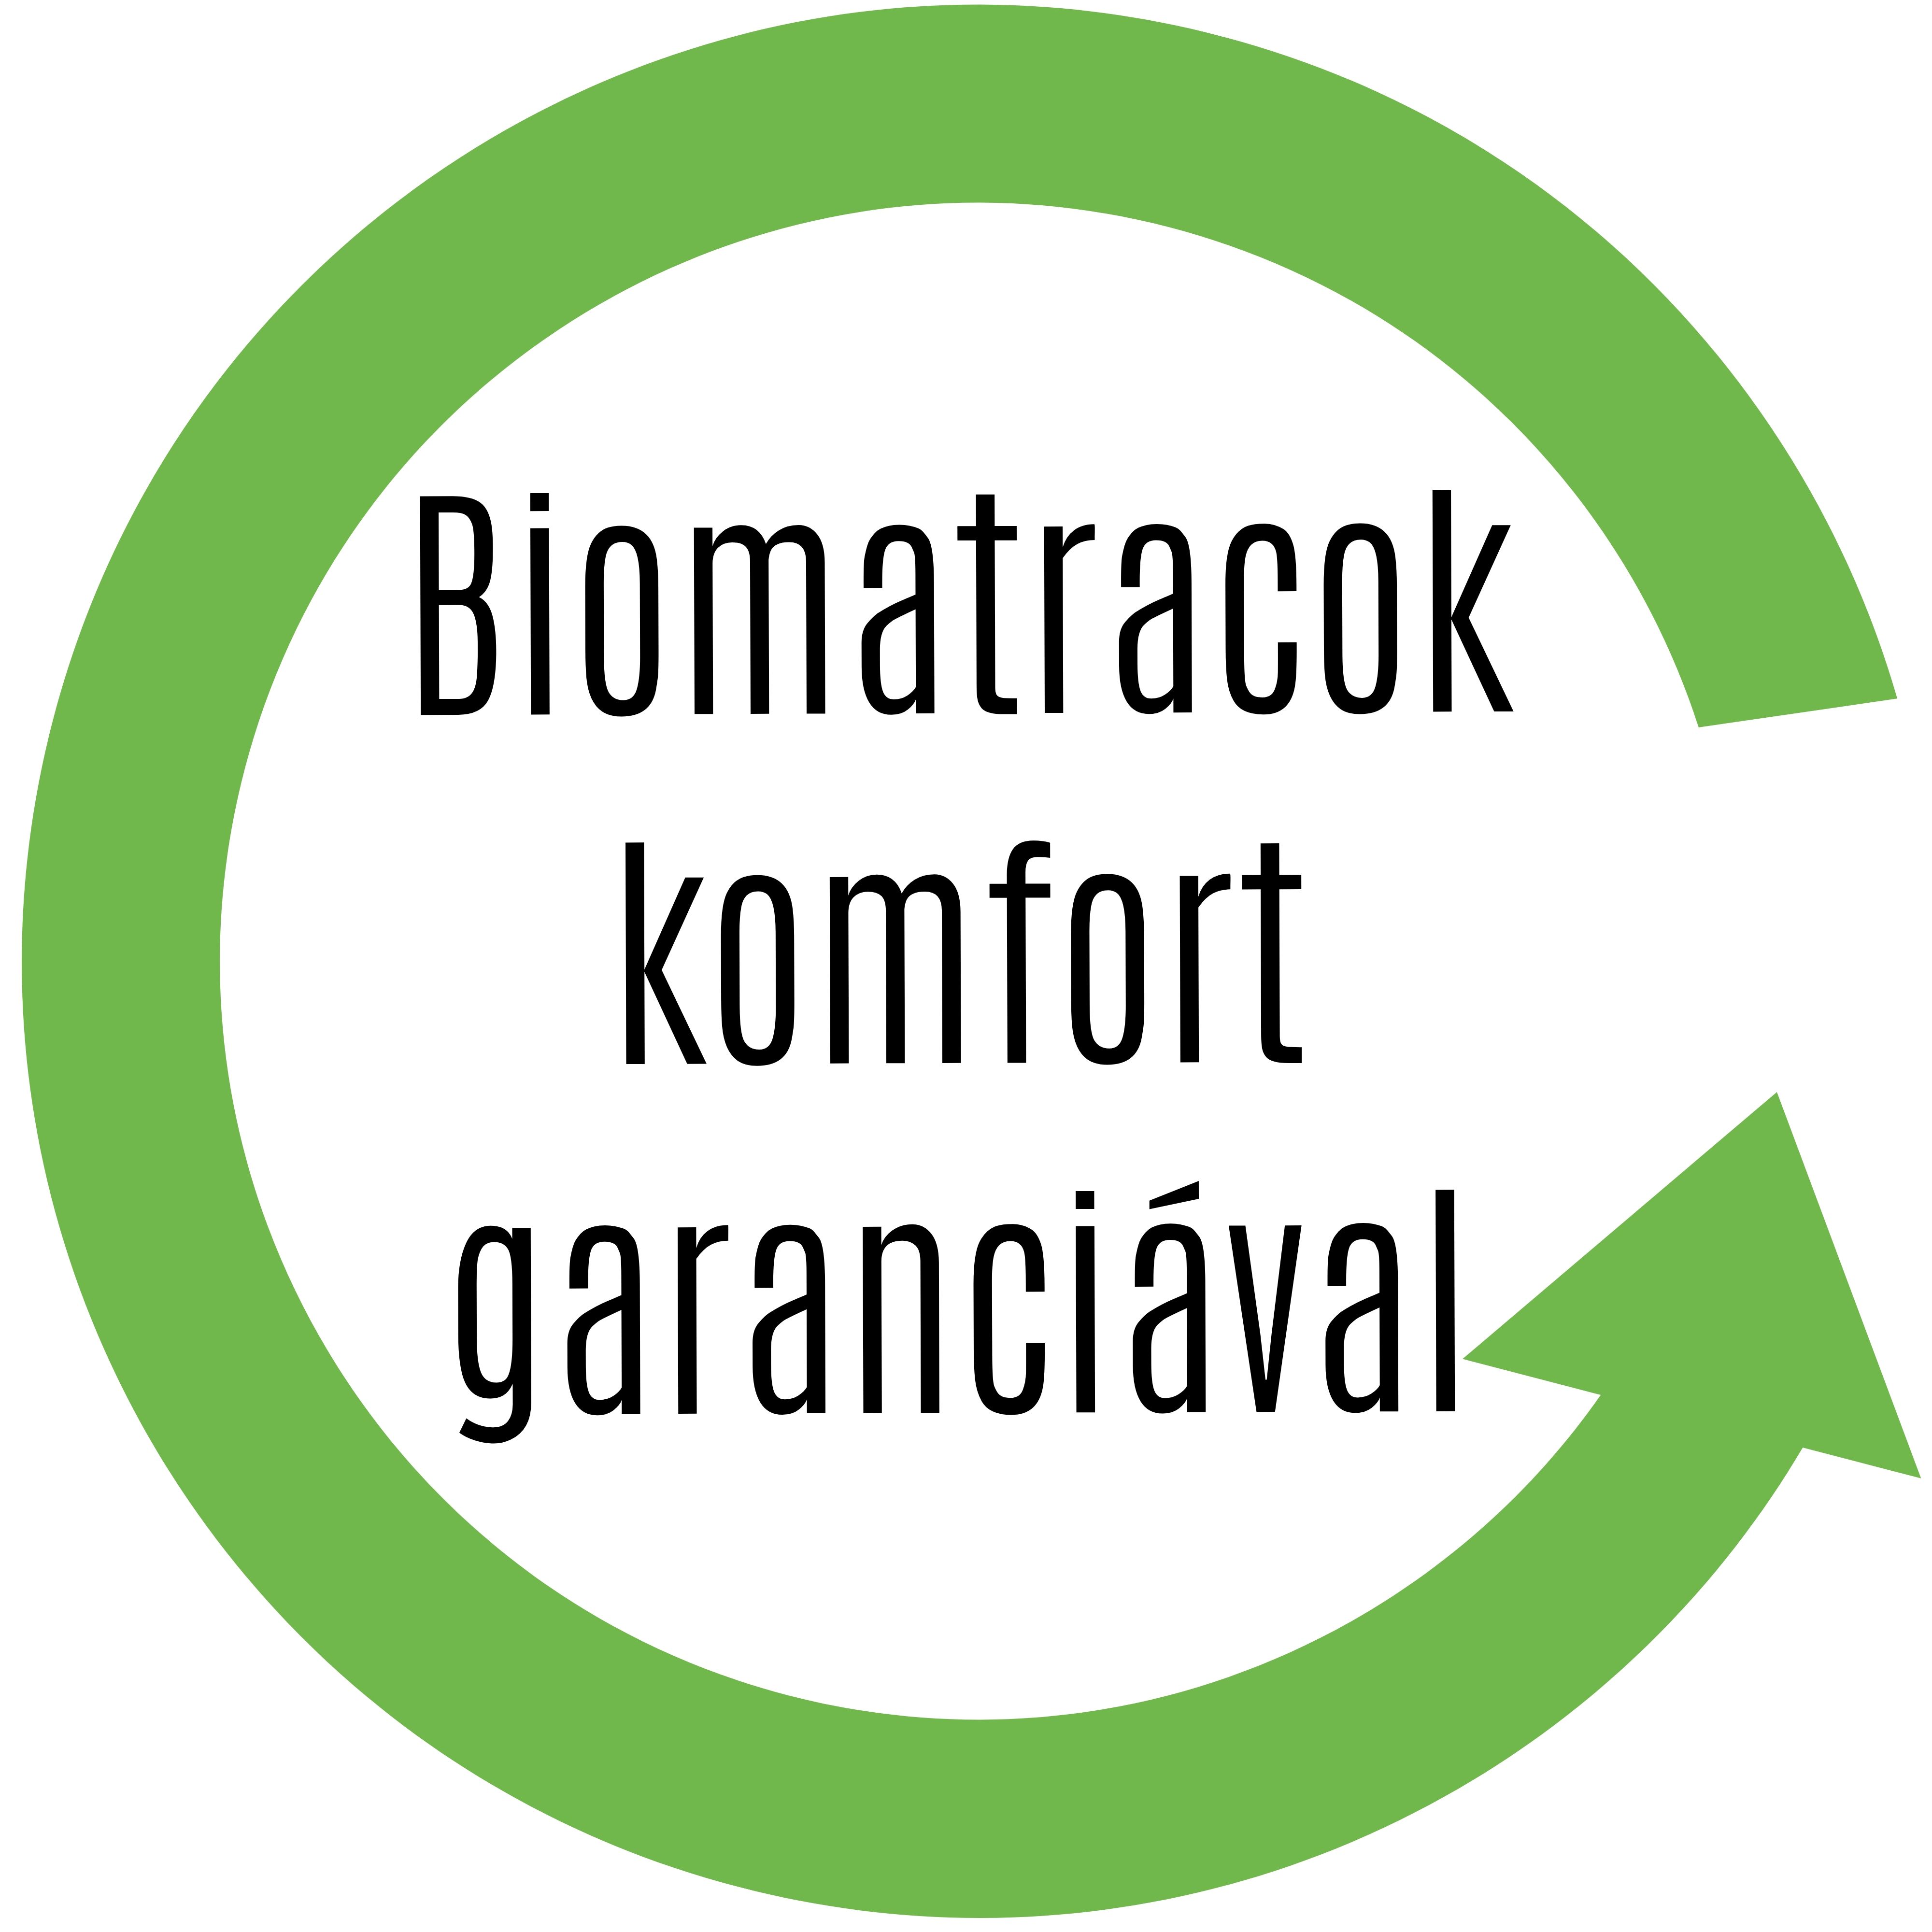 biomatrac komfort garanciával